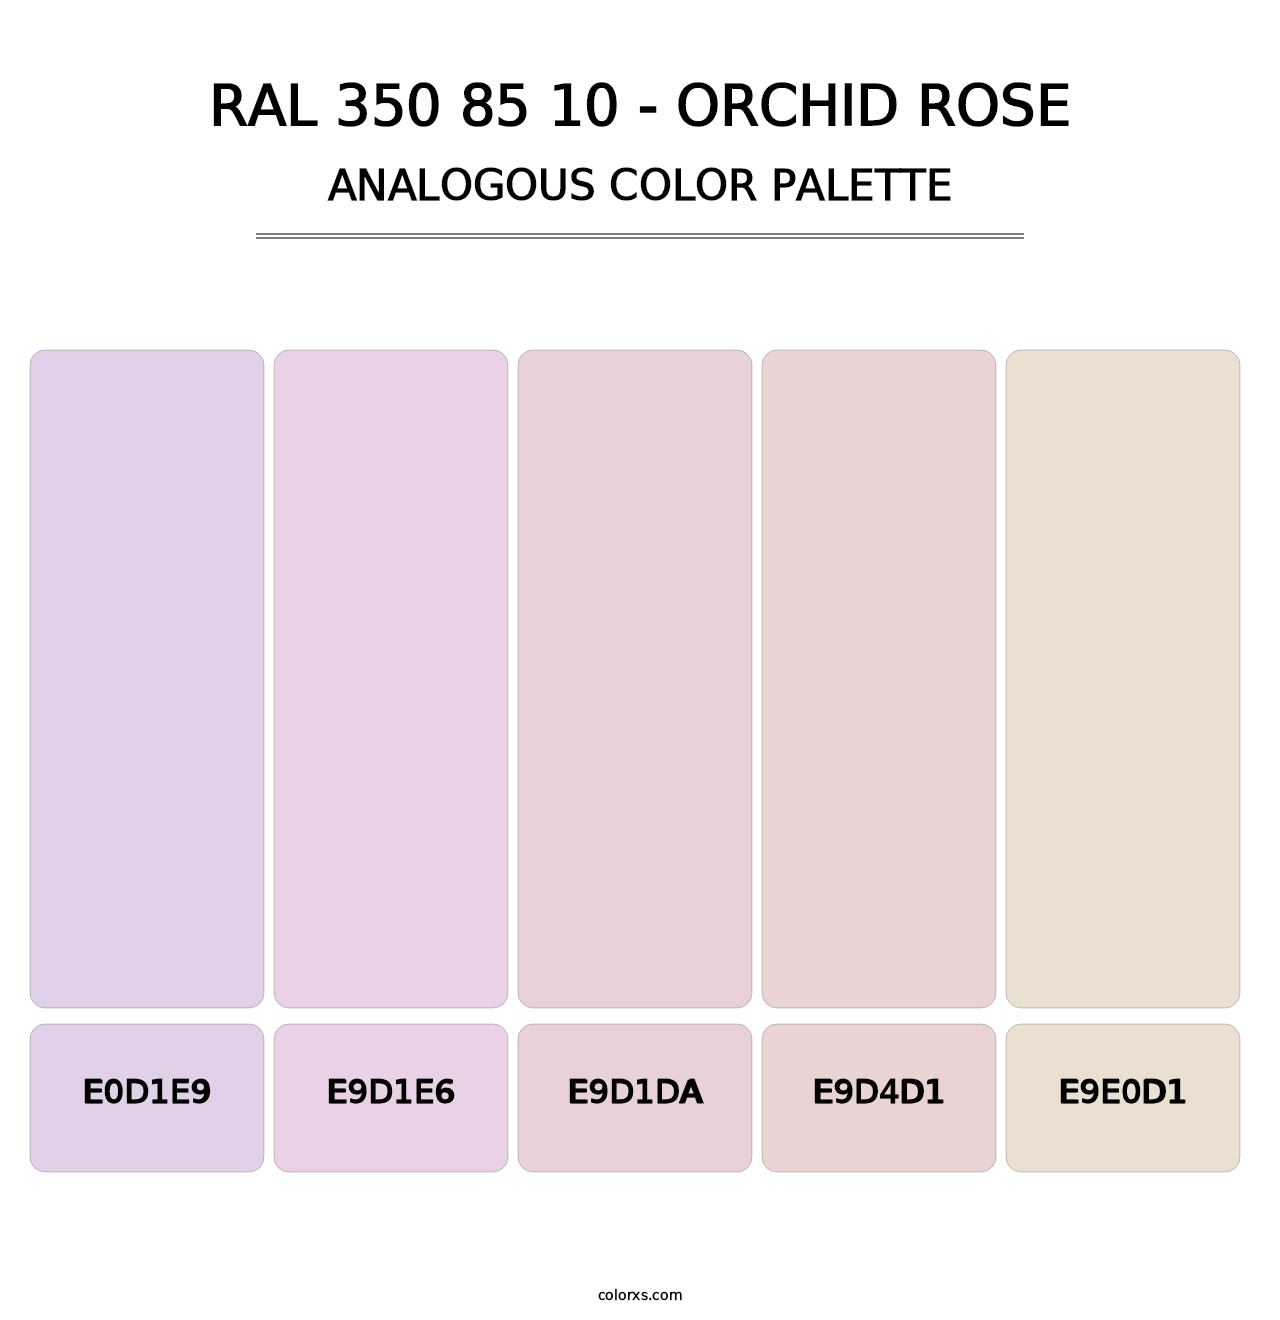 RAL 350 85 10 - Orchid Rose - Analogous Color Palette